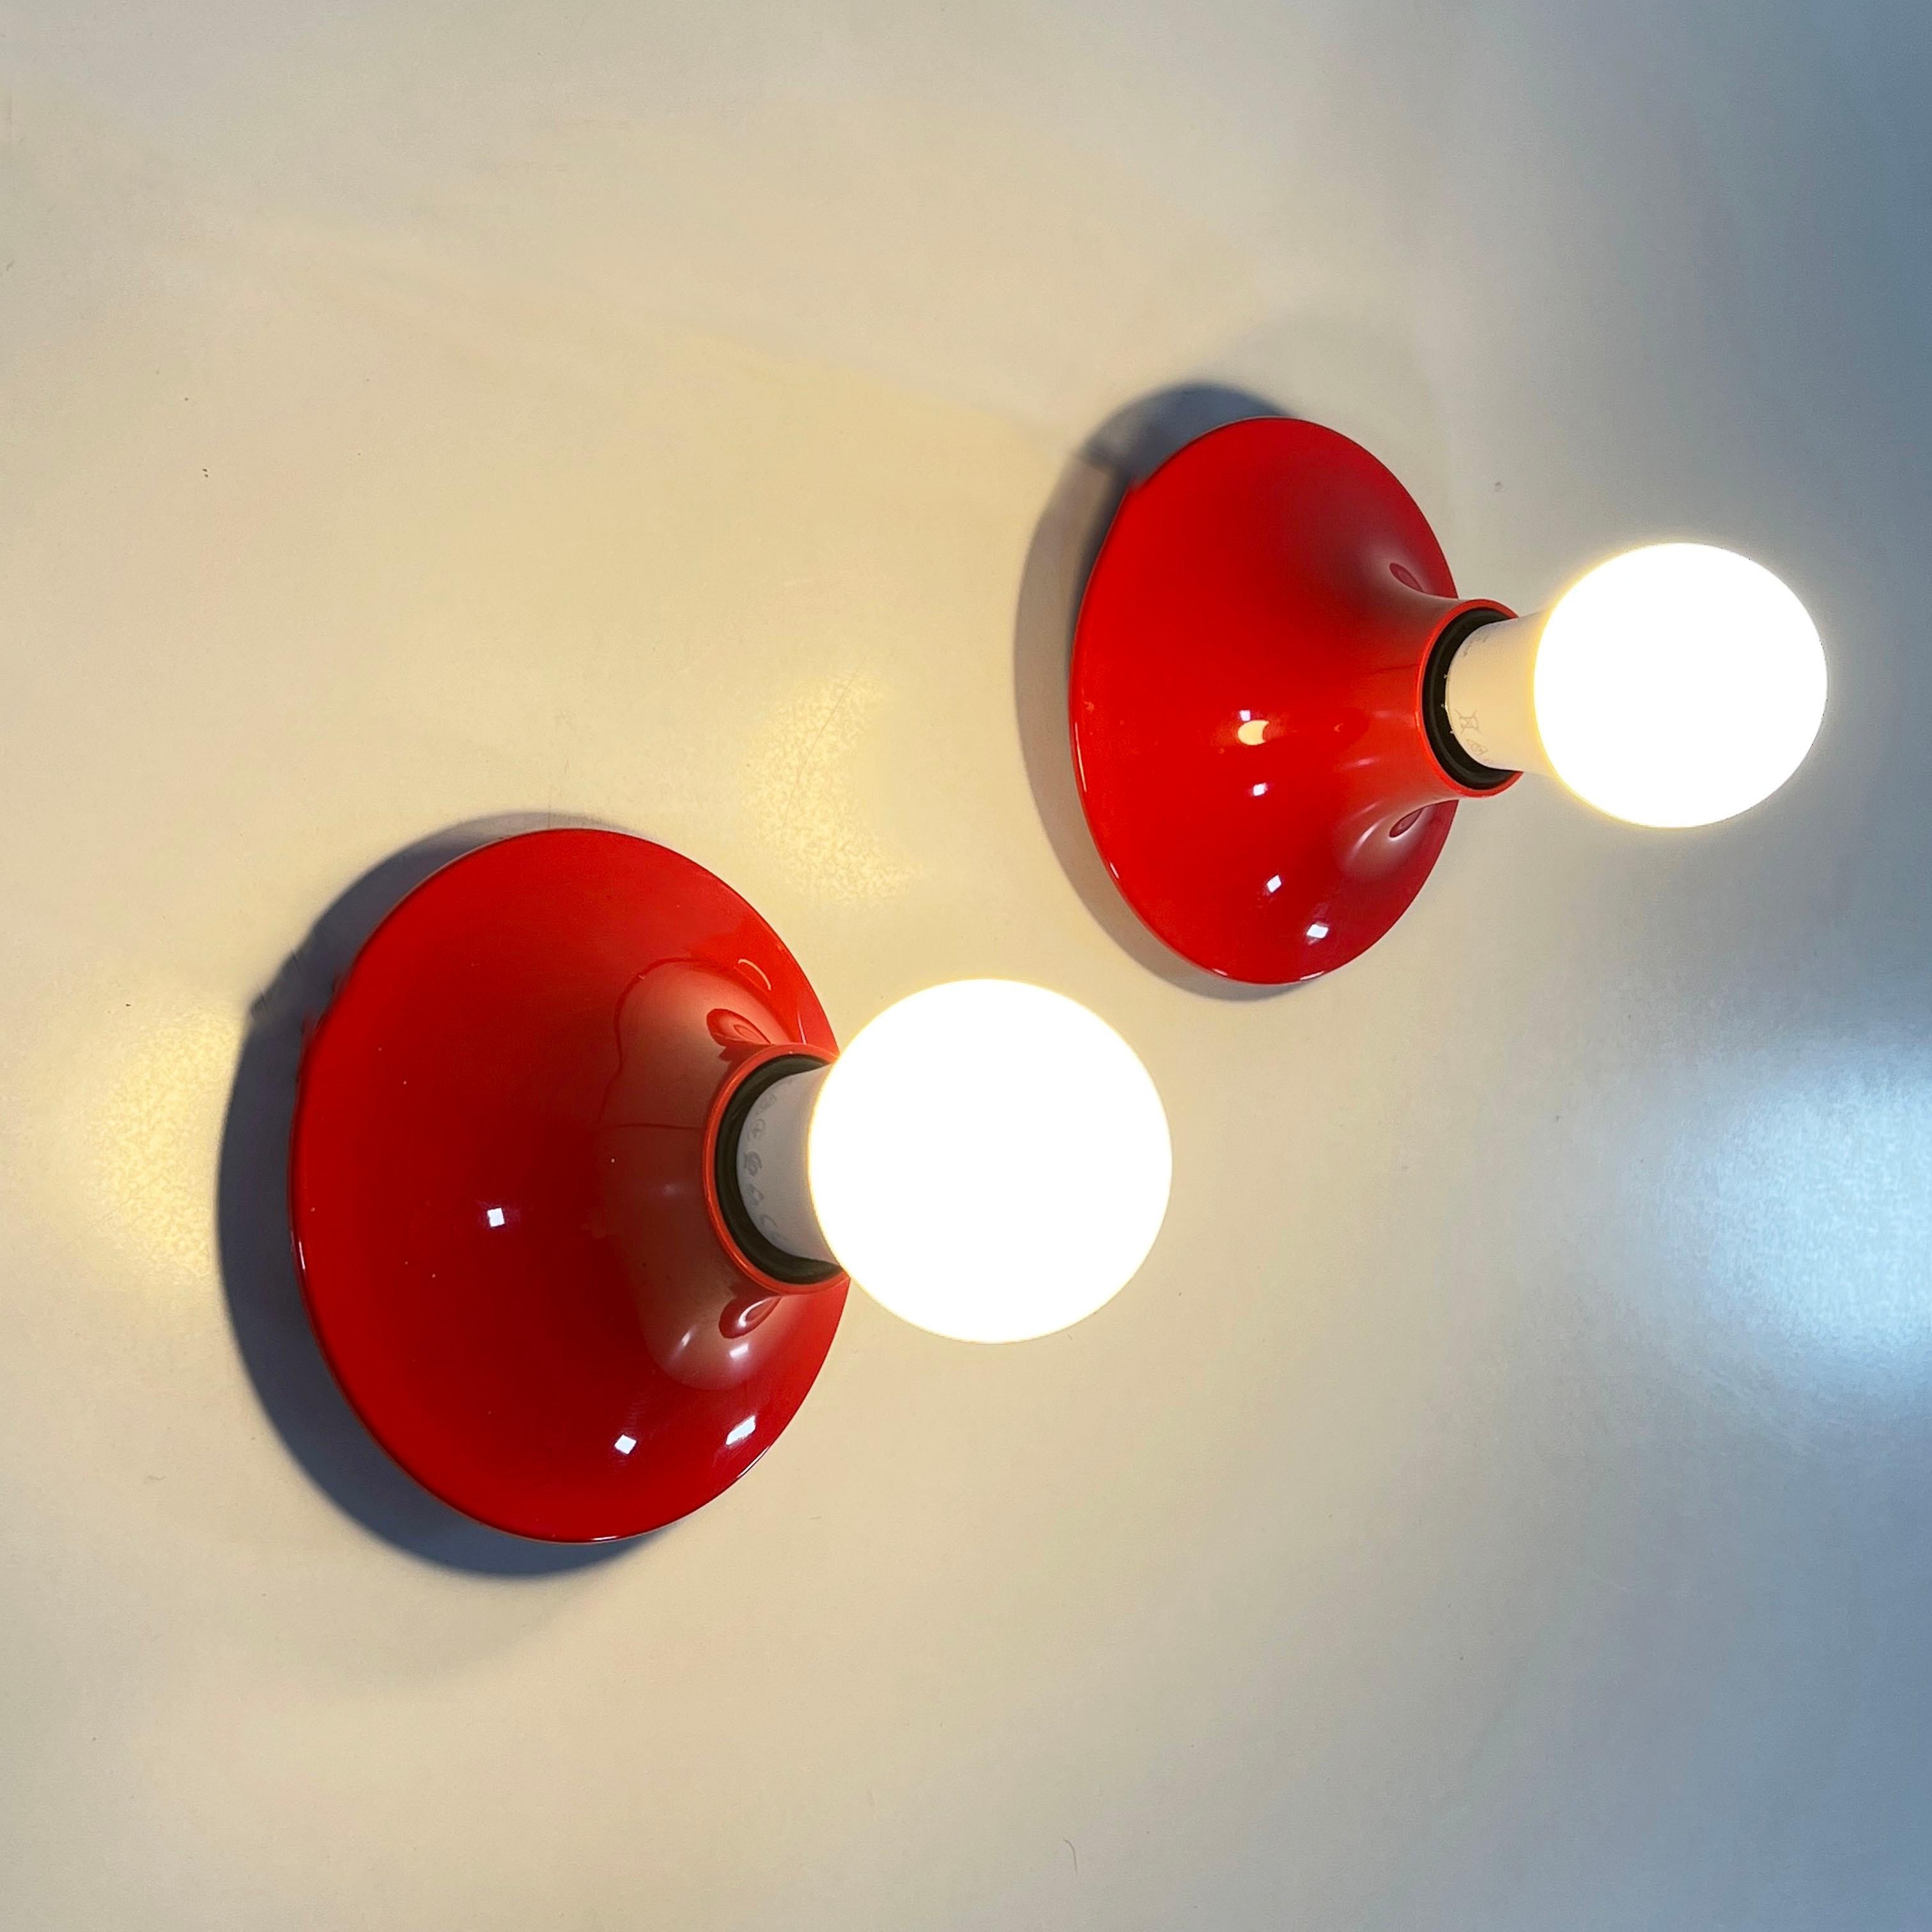 Designer - Vico Magistretti
Producer - Artemide
Model - “Teti” Wall Lamp 
Design Period - Sixties
Measurements - Width 7 cm x Depth 7 cm x Height 14 cm
Materials - Plastic
Color - Red
??????Condition - Good 
Comments - Light wear consistent